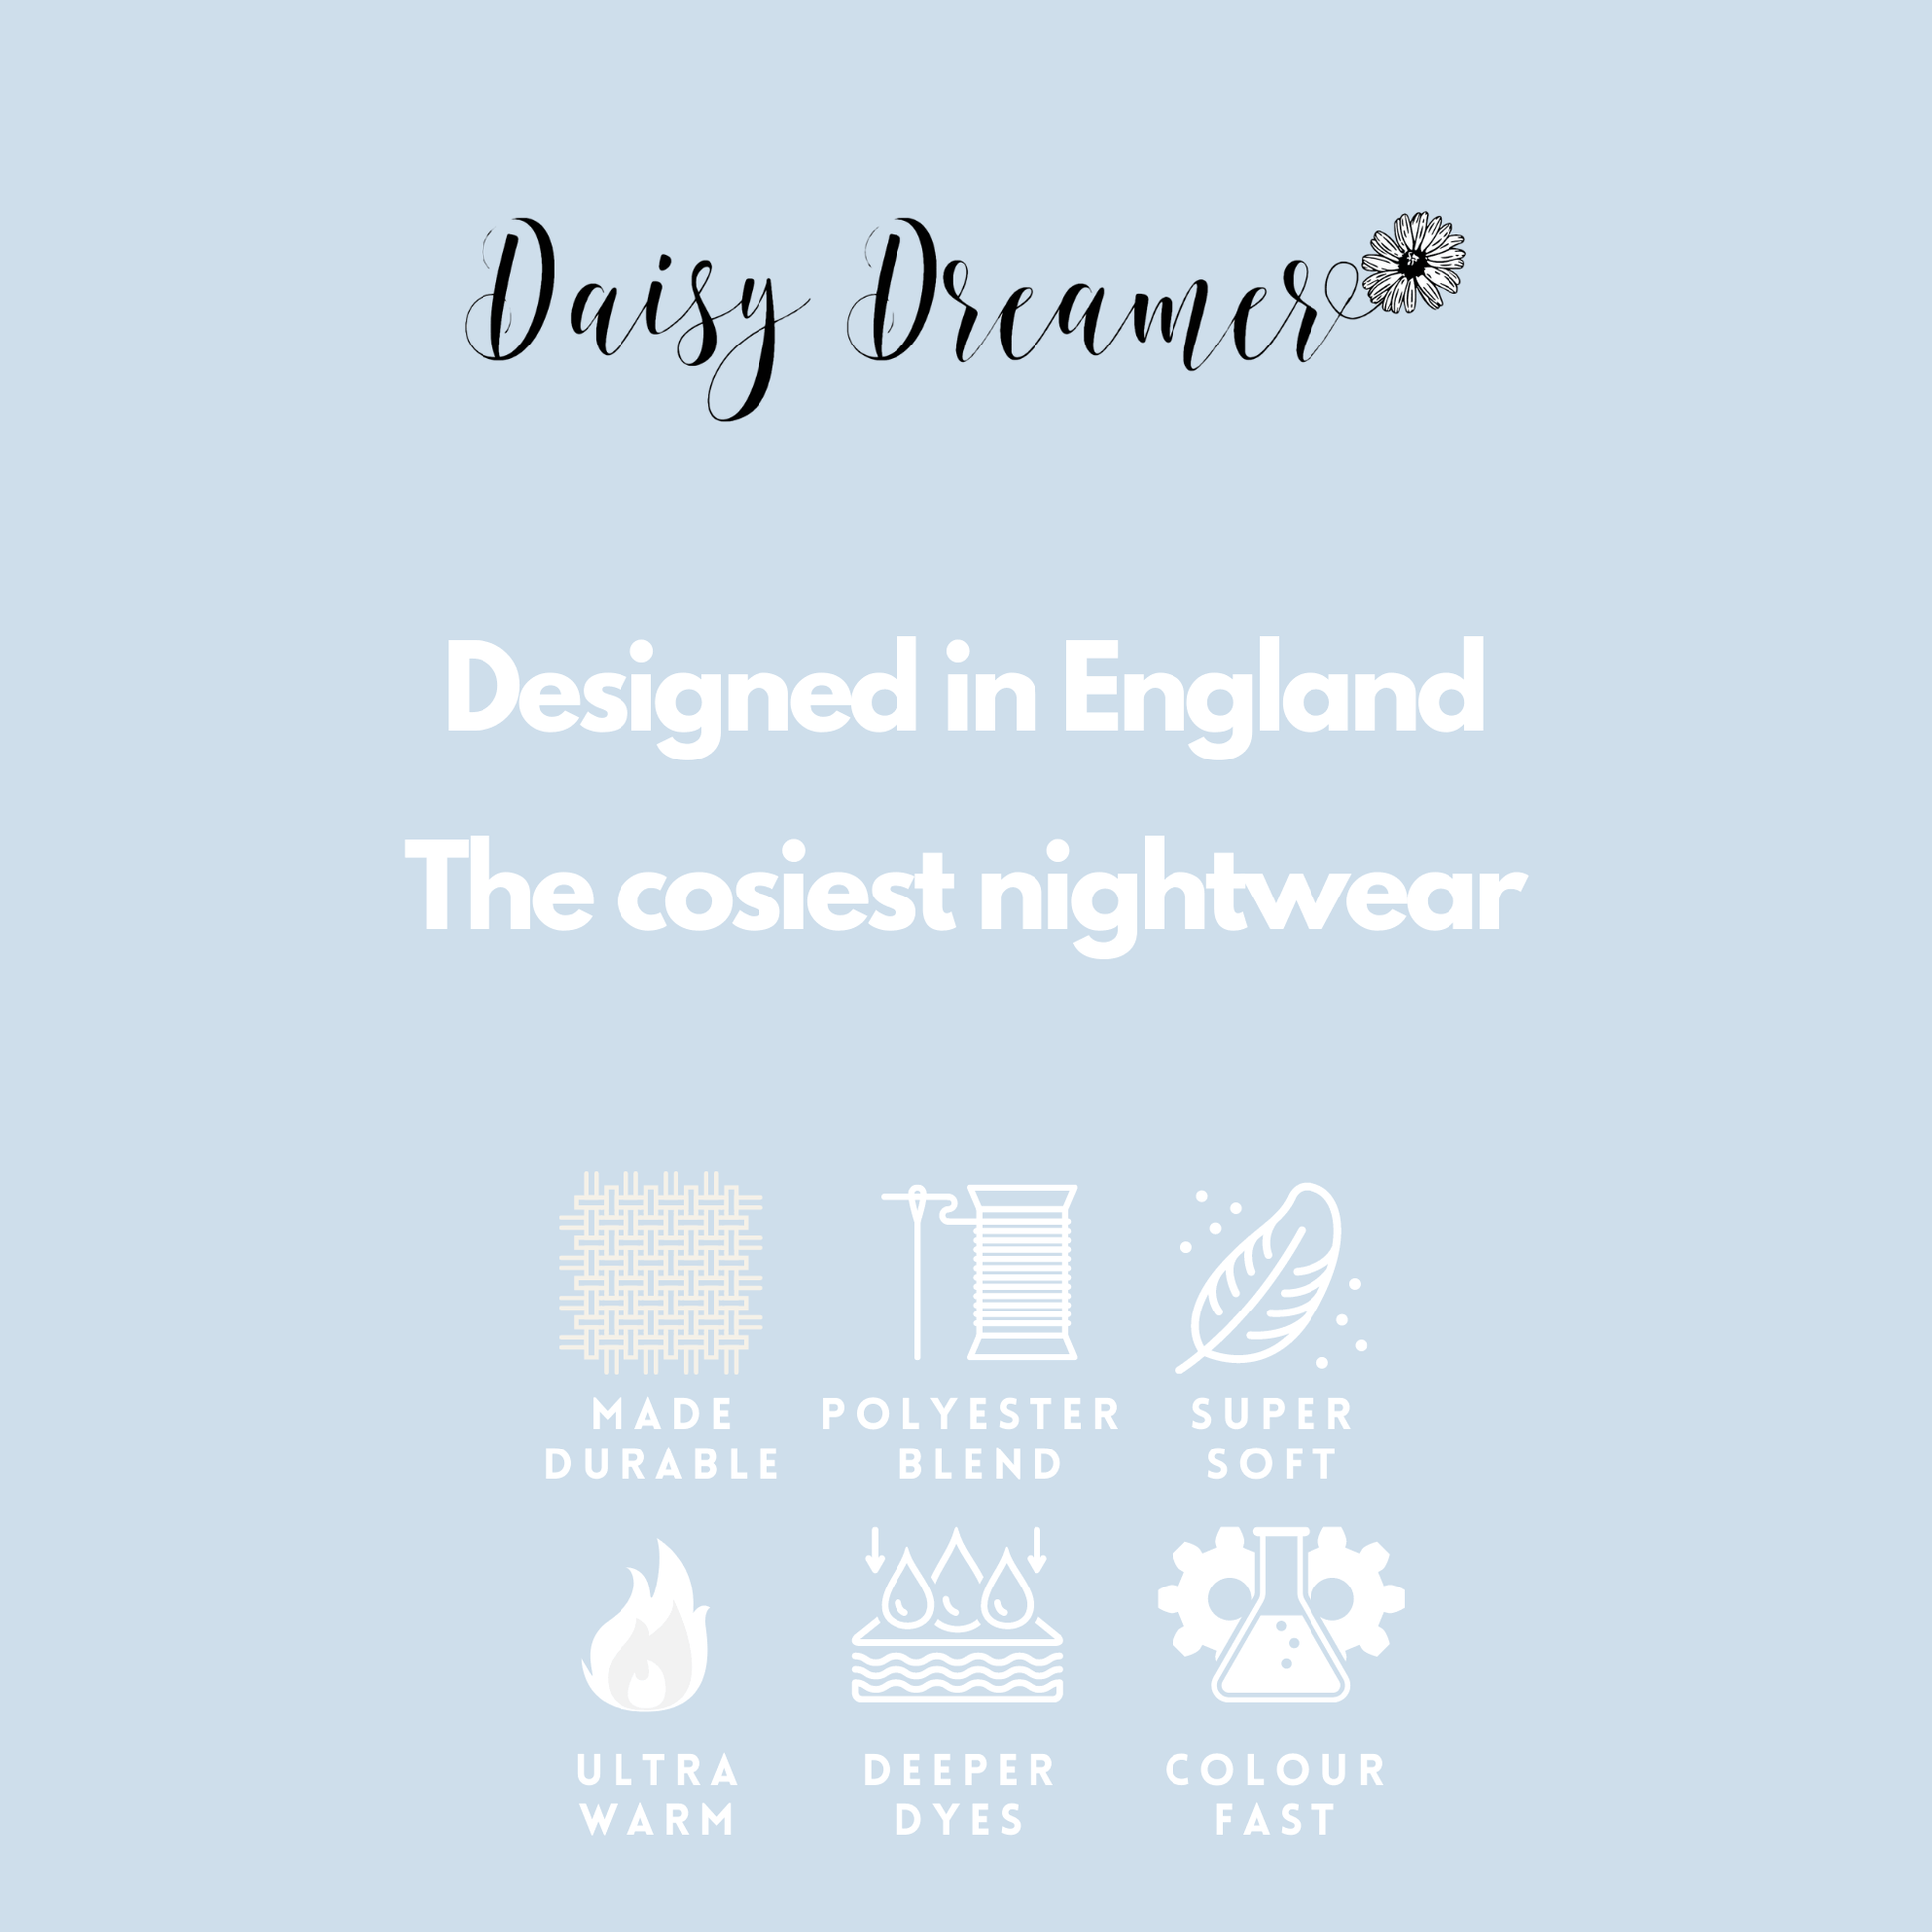 Women's Shimmer Grey Plush Fleece Hooded Pyjama Set. Buy now for £25.00. A Pyjamas by Daisy Dreamer. 12-14, 16-18, 20-22, 8-10, bridesmaid, flannel, fleece, grey, gym, hooded, hotel, ladies, large, loungewear, medium, nightwear, plush, pom pom, pyjama, sh